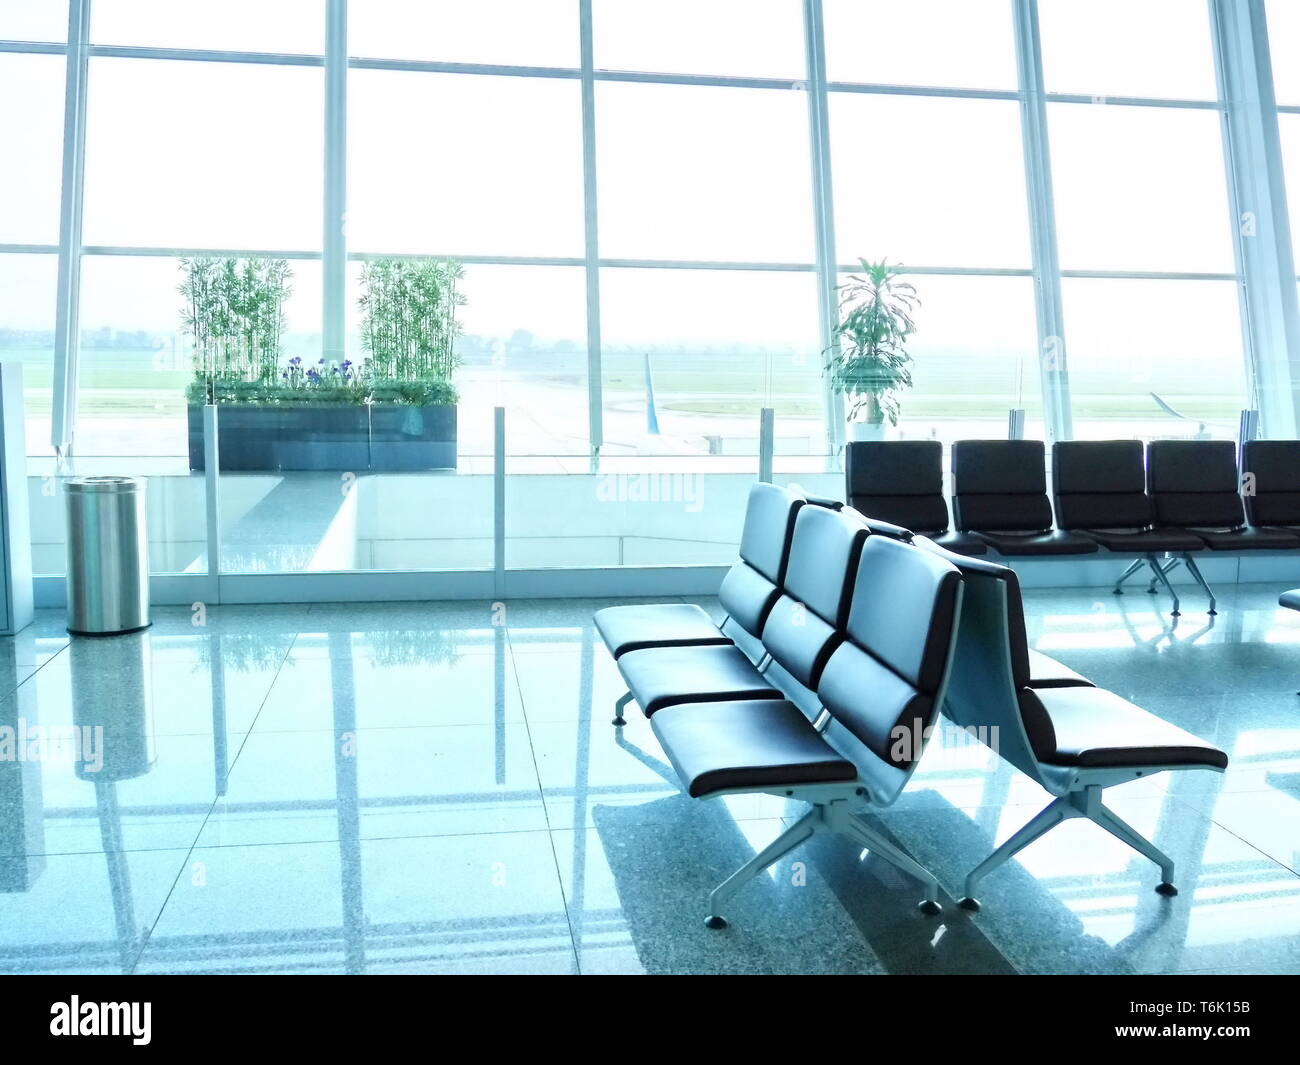 the interior desingof air port terminal Stock Photo